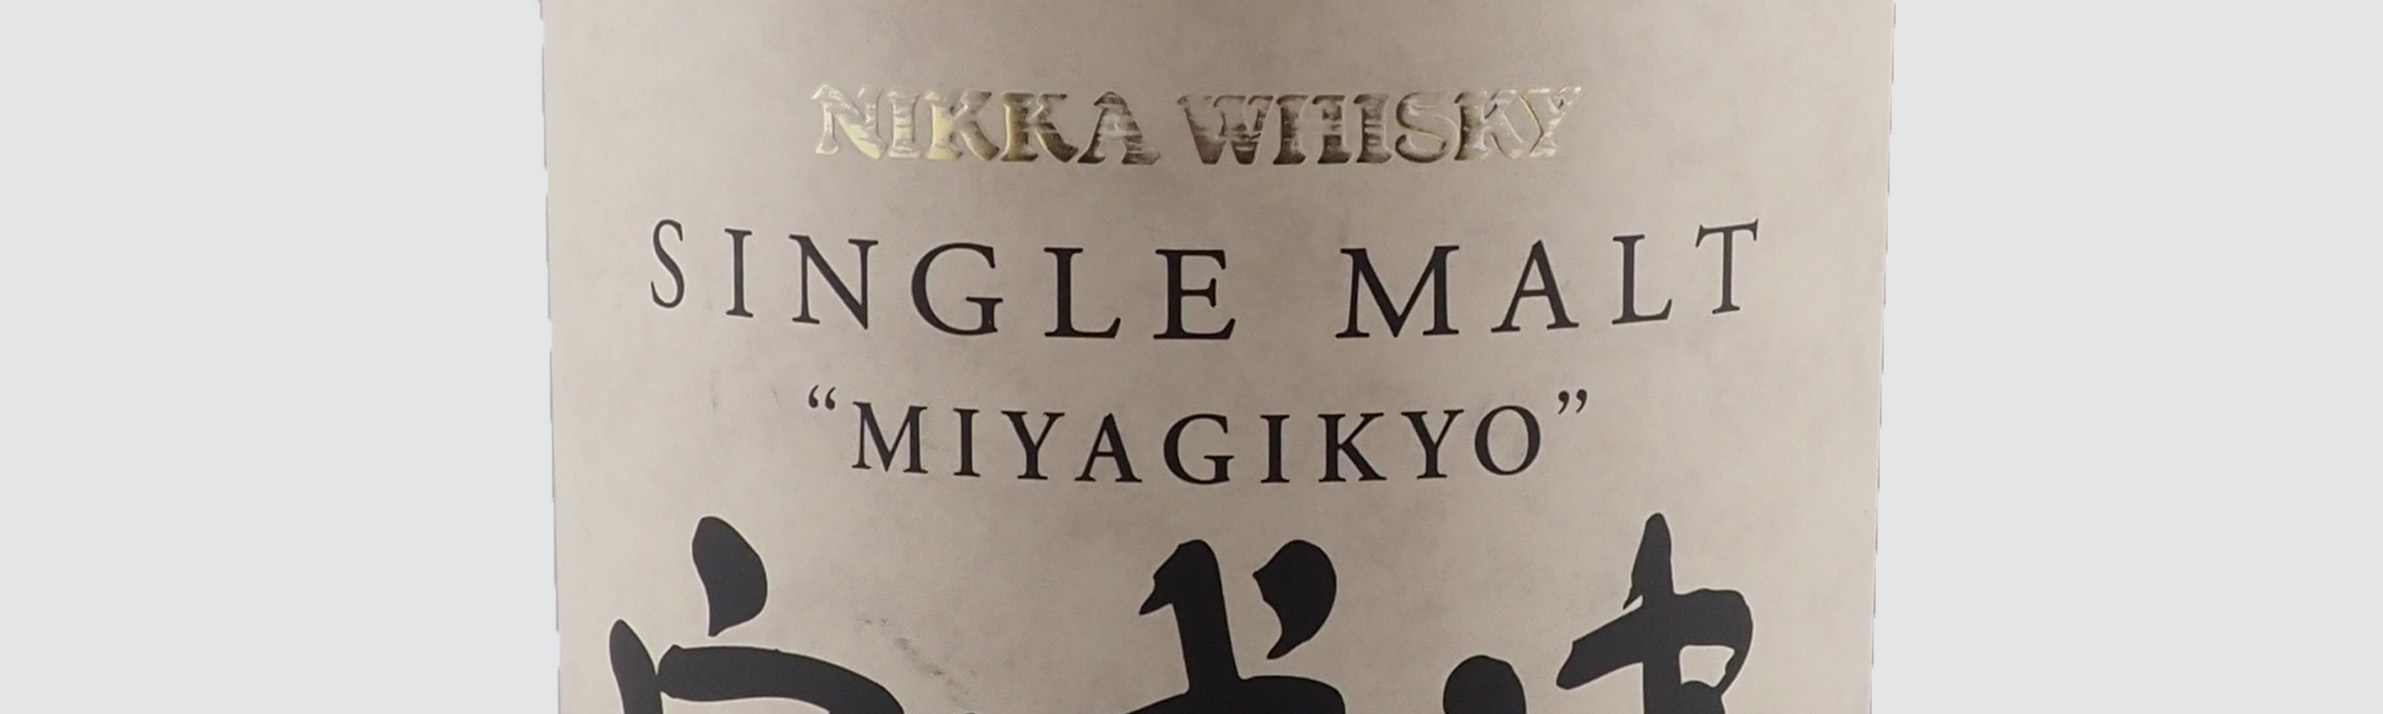 Nikka whisky auction : Distillery